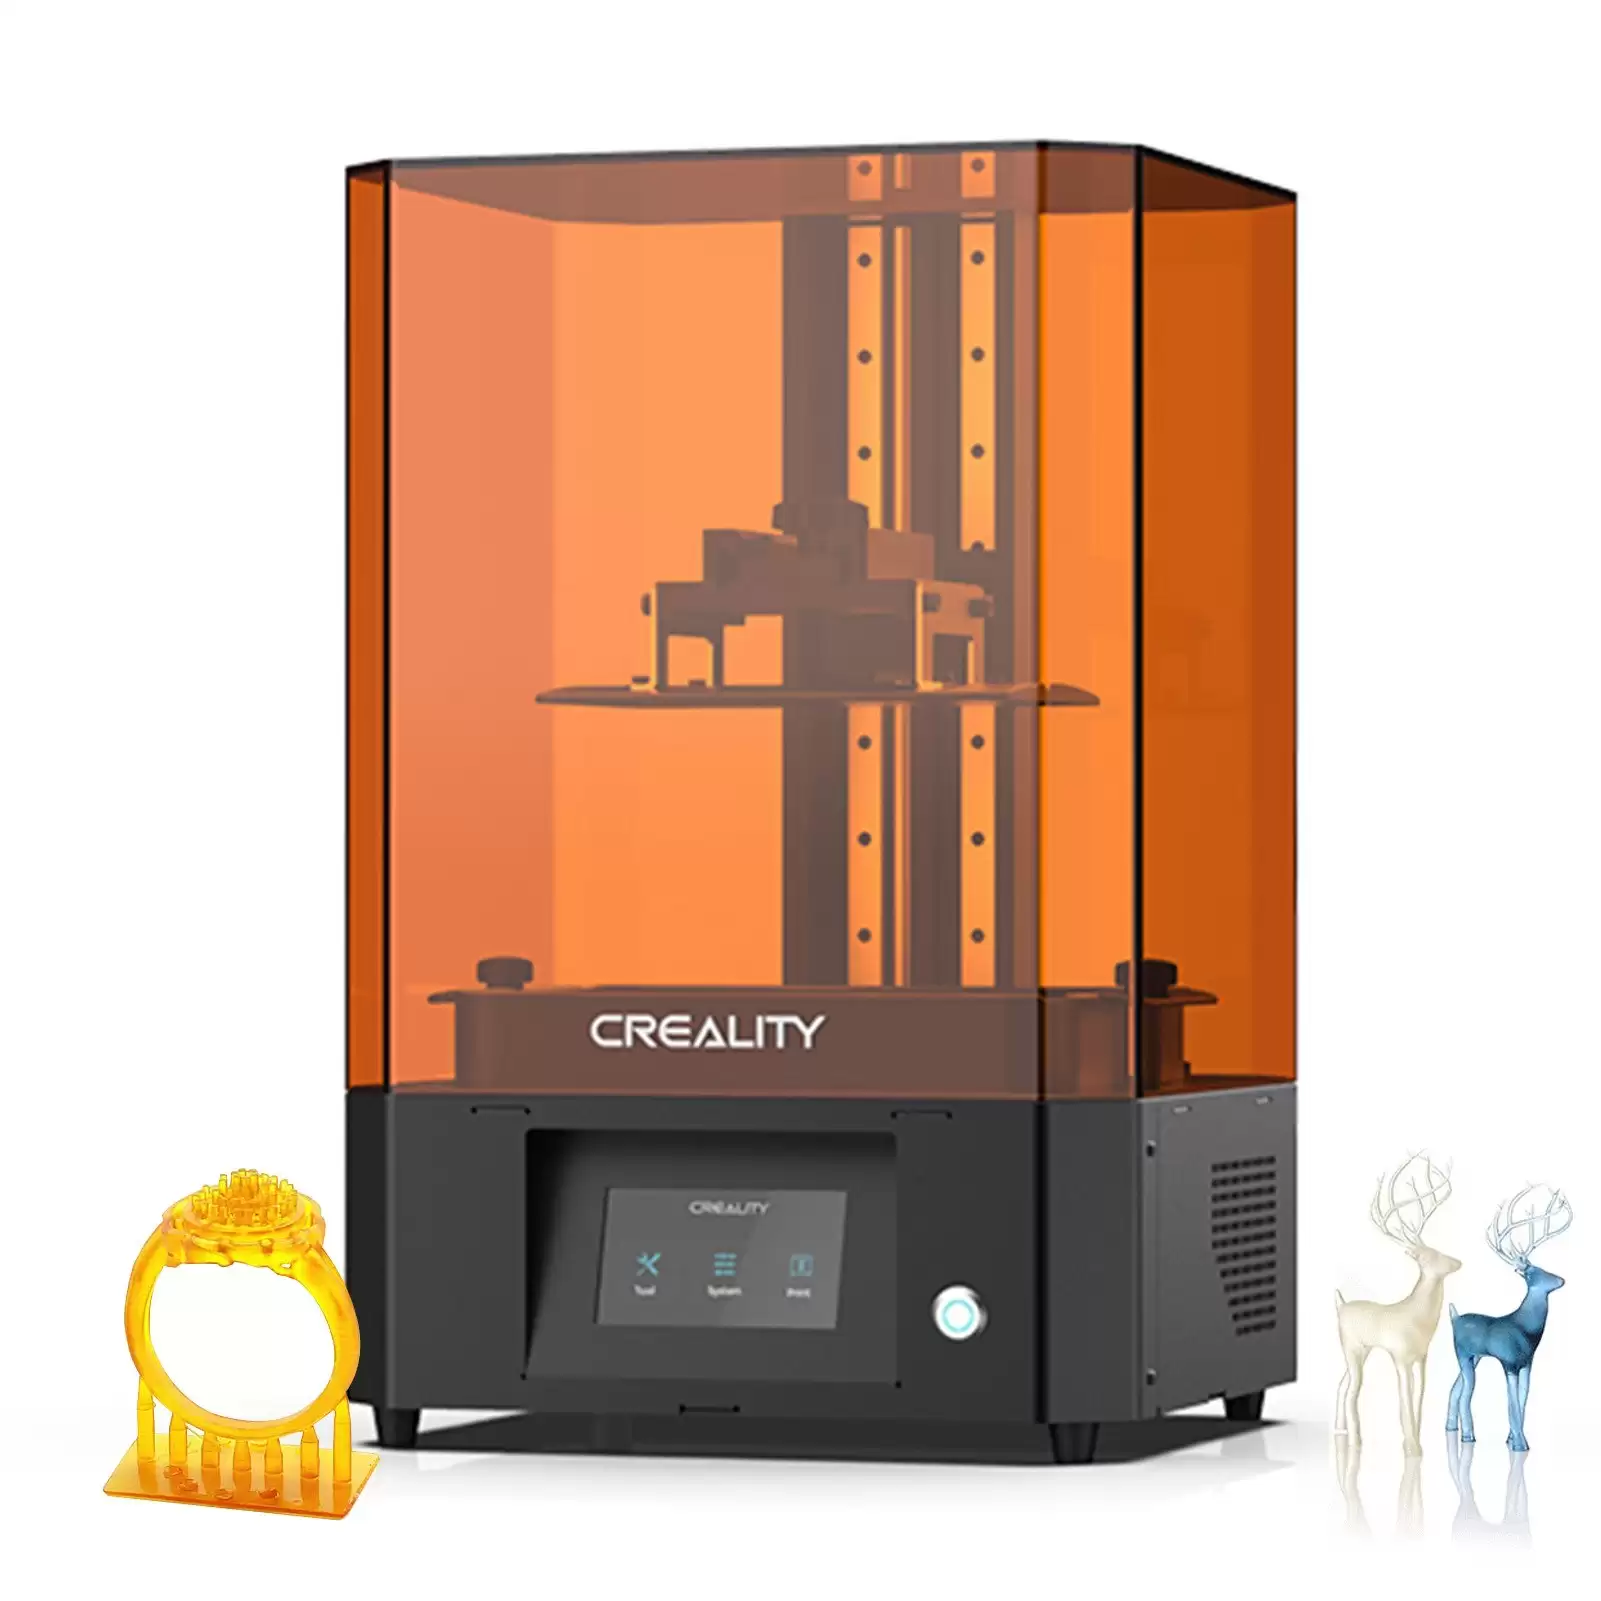 Order In Just $429 Get $260 Off Original Creality Ld-006 Lcd Resin 3d Printer At Tomtop